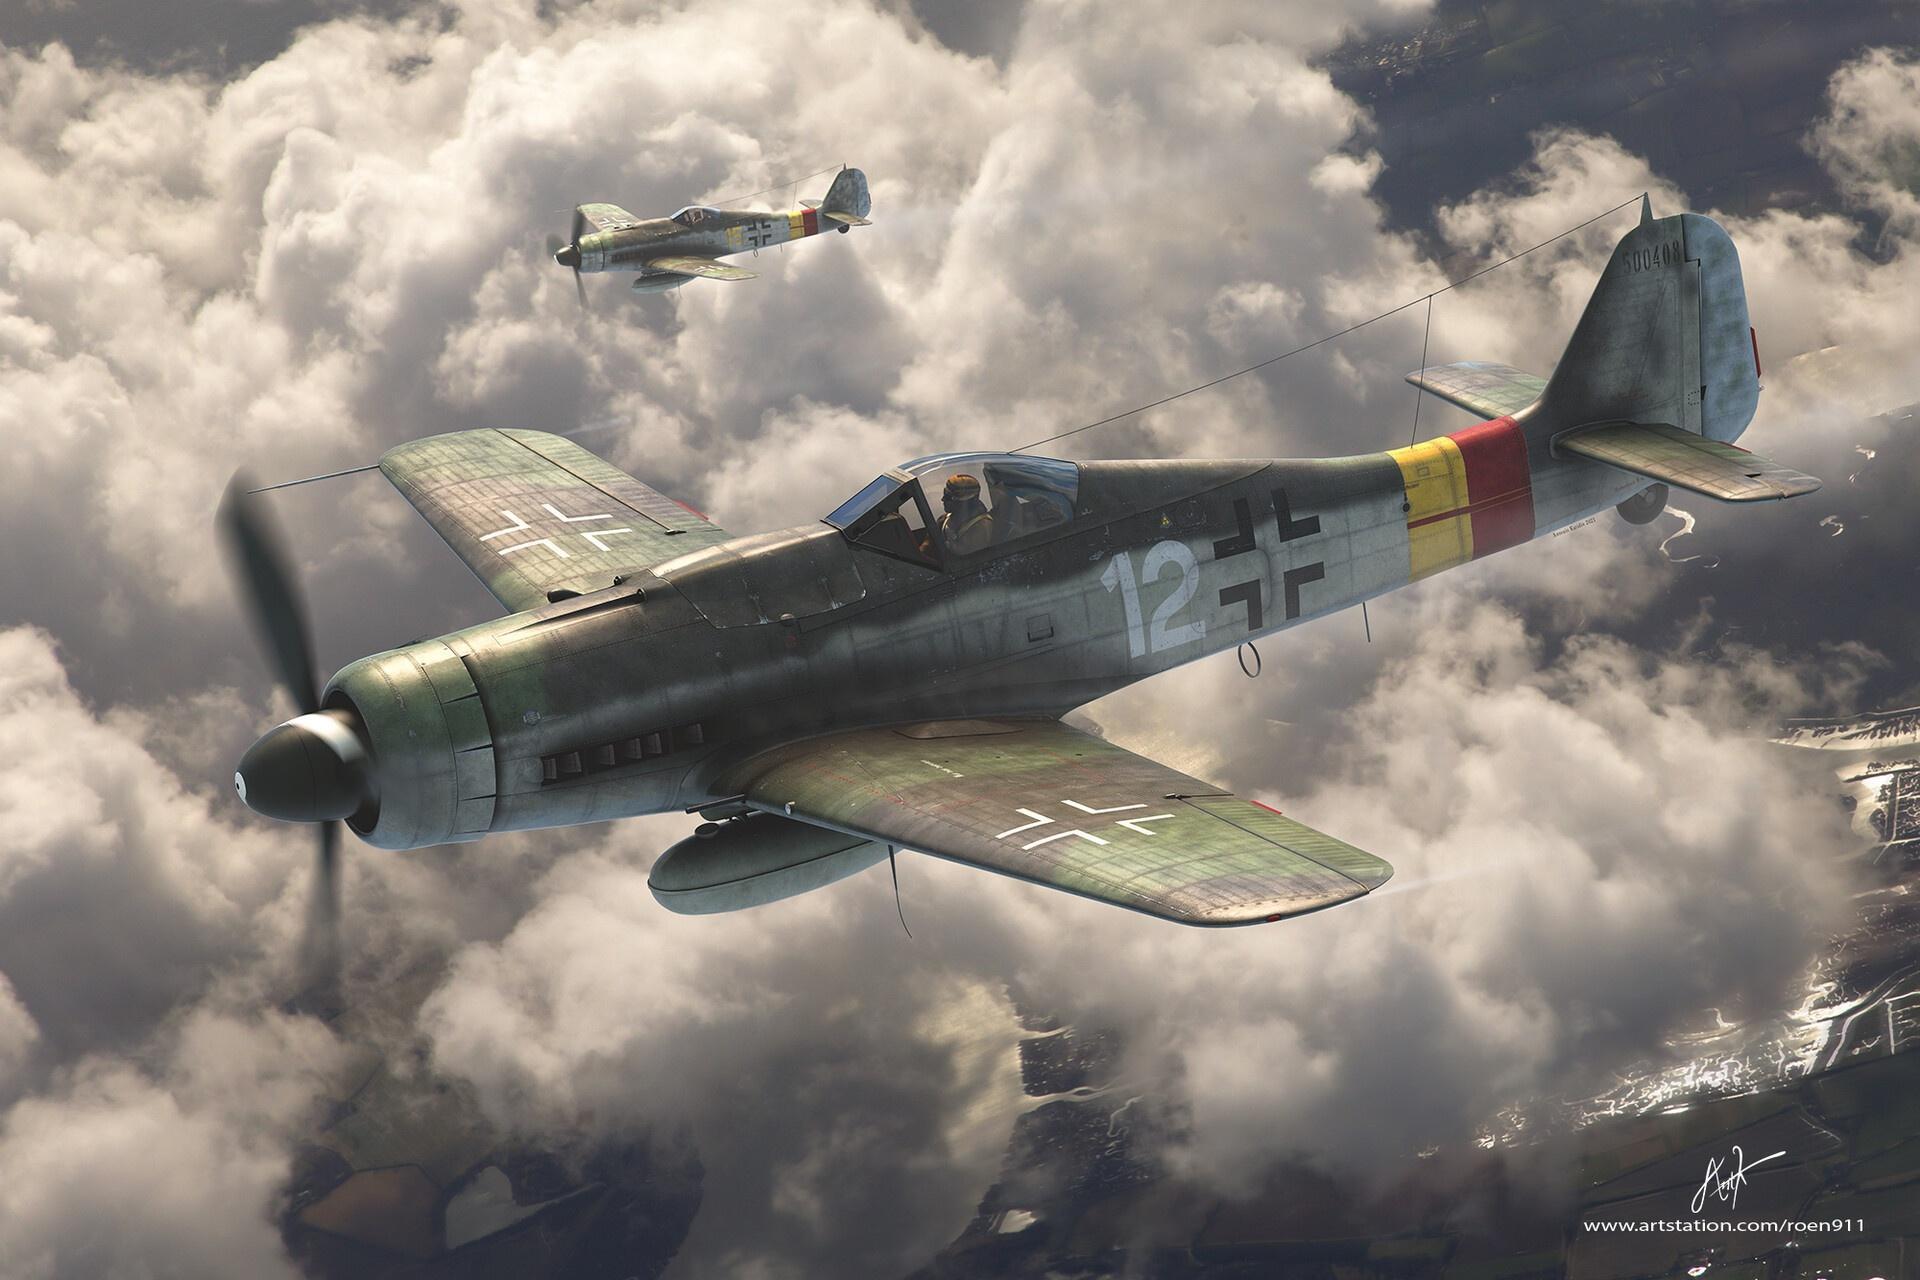 HD wallpaper, Luftwaffe, Focke Wulf Fw 190 Hd